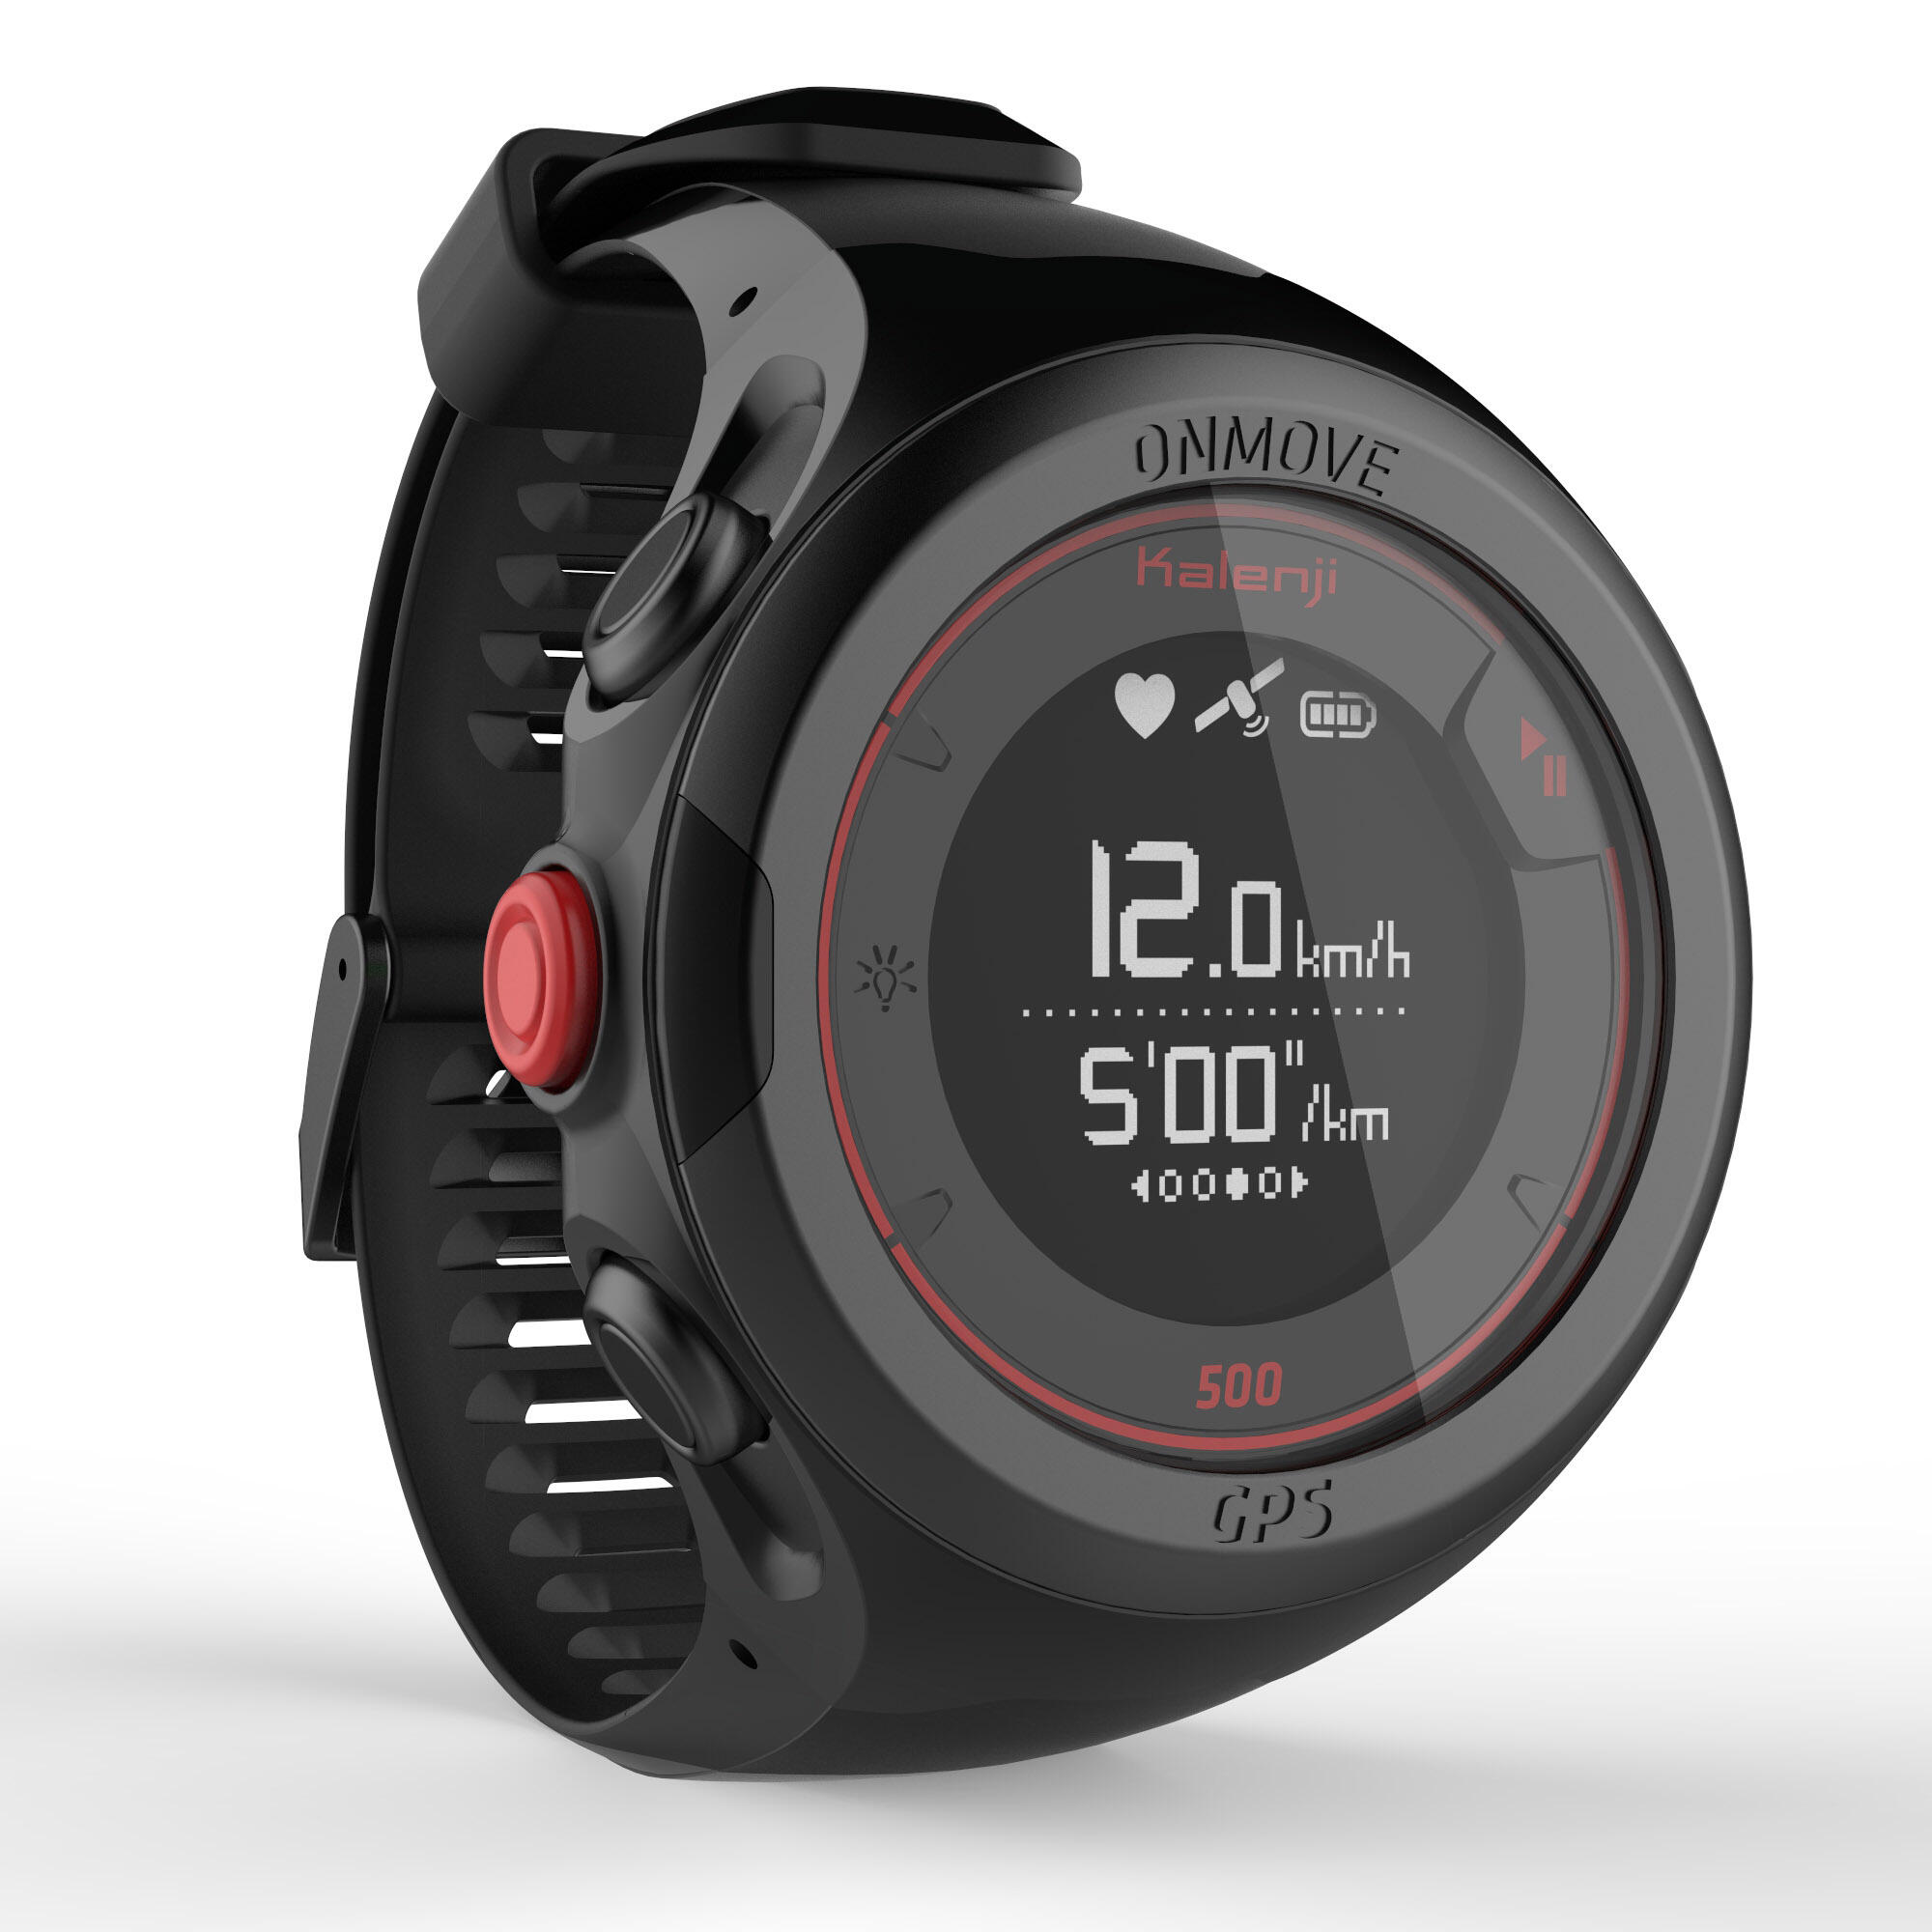 ONmove 500 GPS running watch and wrist heart monitor - black